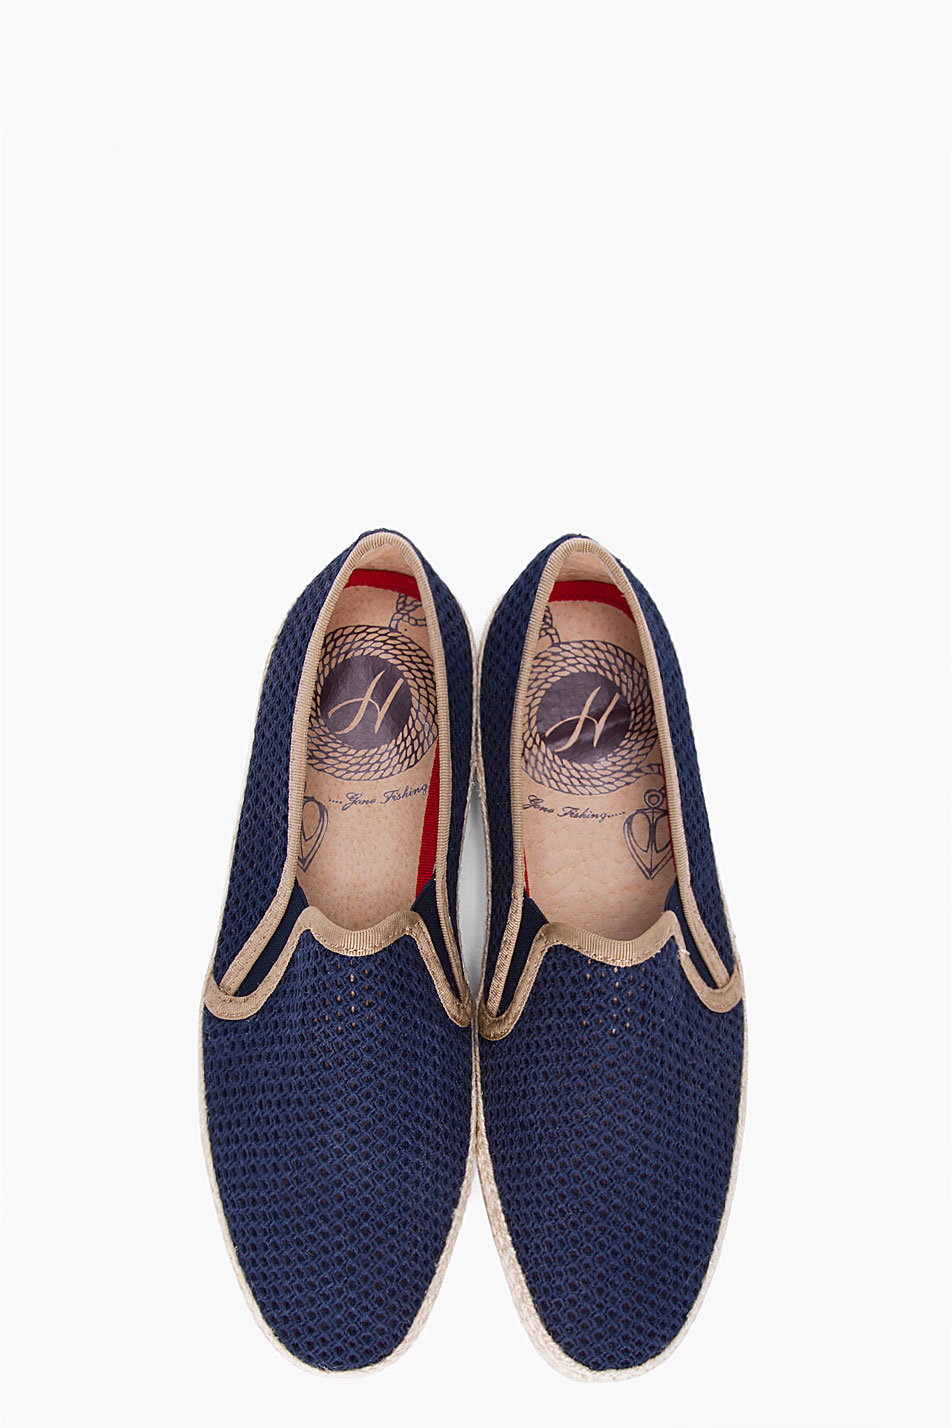 H by Hudson Navy Belafonte Shoes in Blue for Men - Lyst